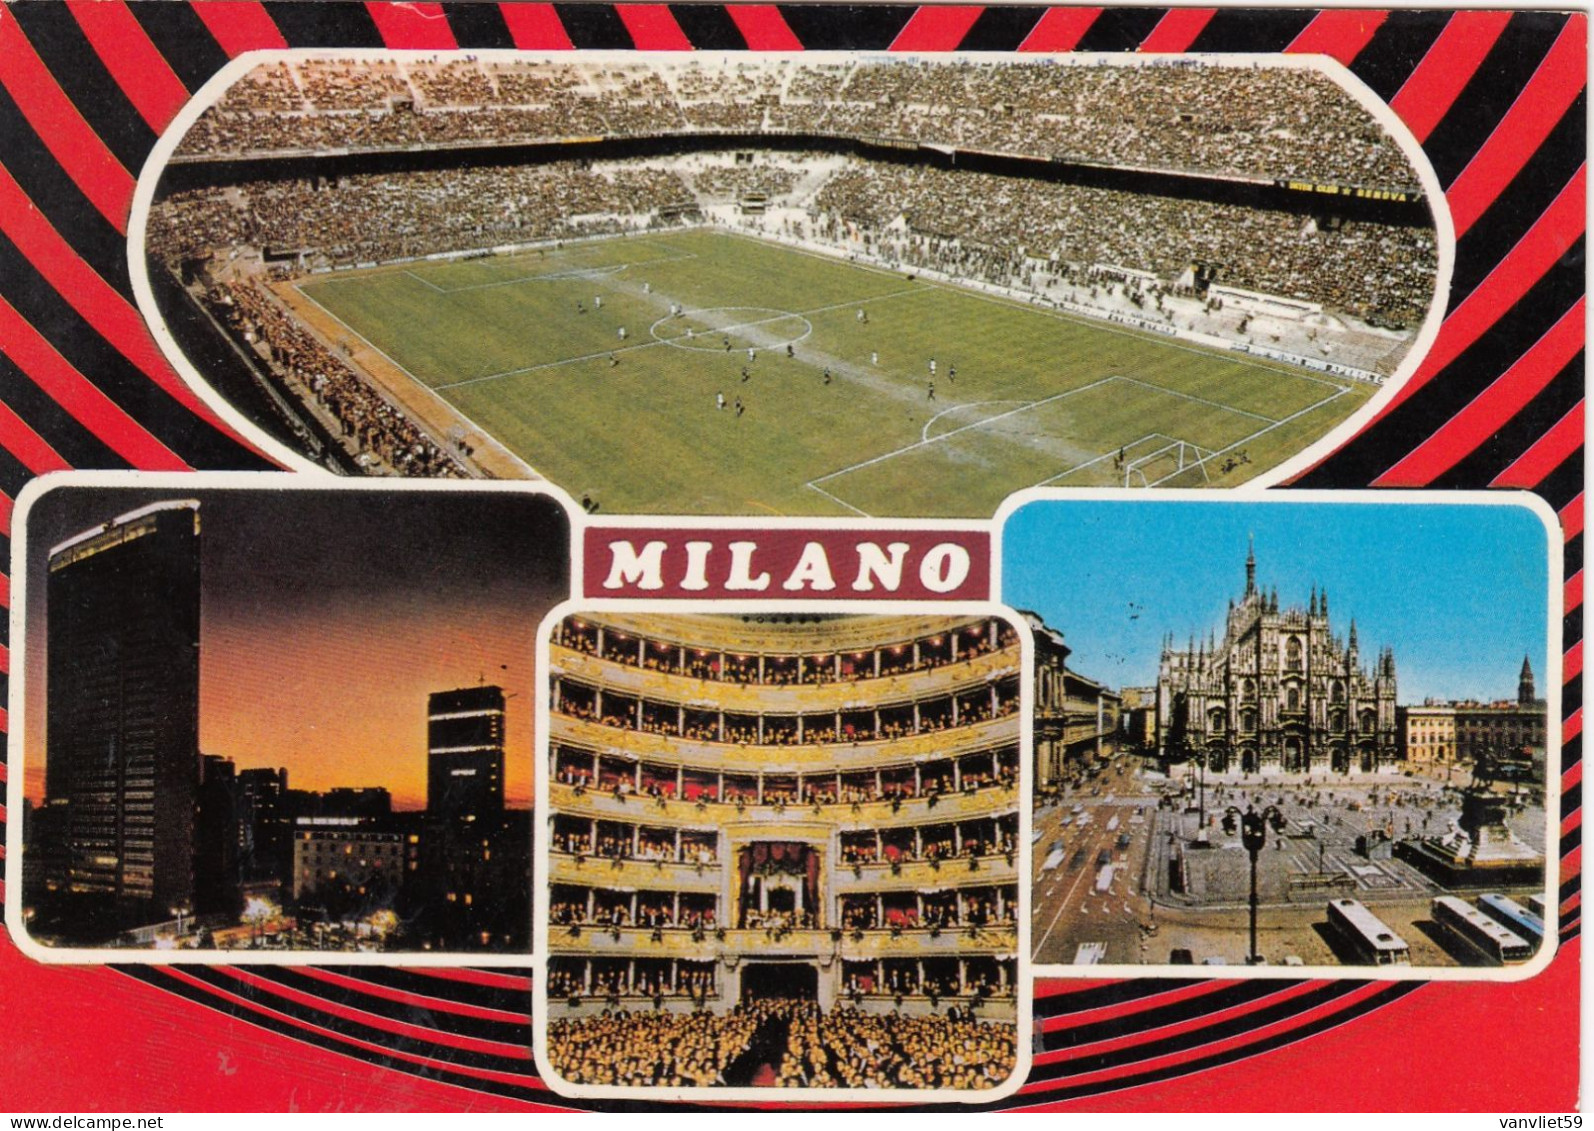 STADIO-STADE-STADIUM-ESTADIO-CAMPO SPORTIVO-SOCCER-FOOTBALL- 3 CARTOLINE MILANO-TORINO- VERA FOTO-2 VIAGGIATE 1968-1996 - Football